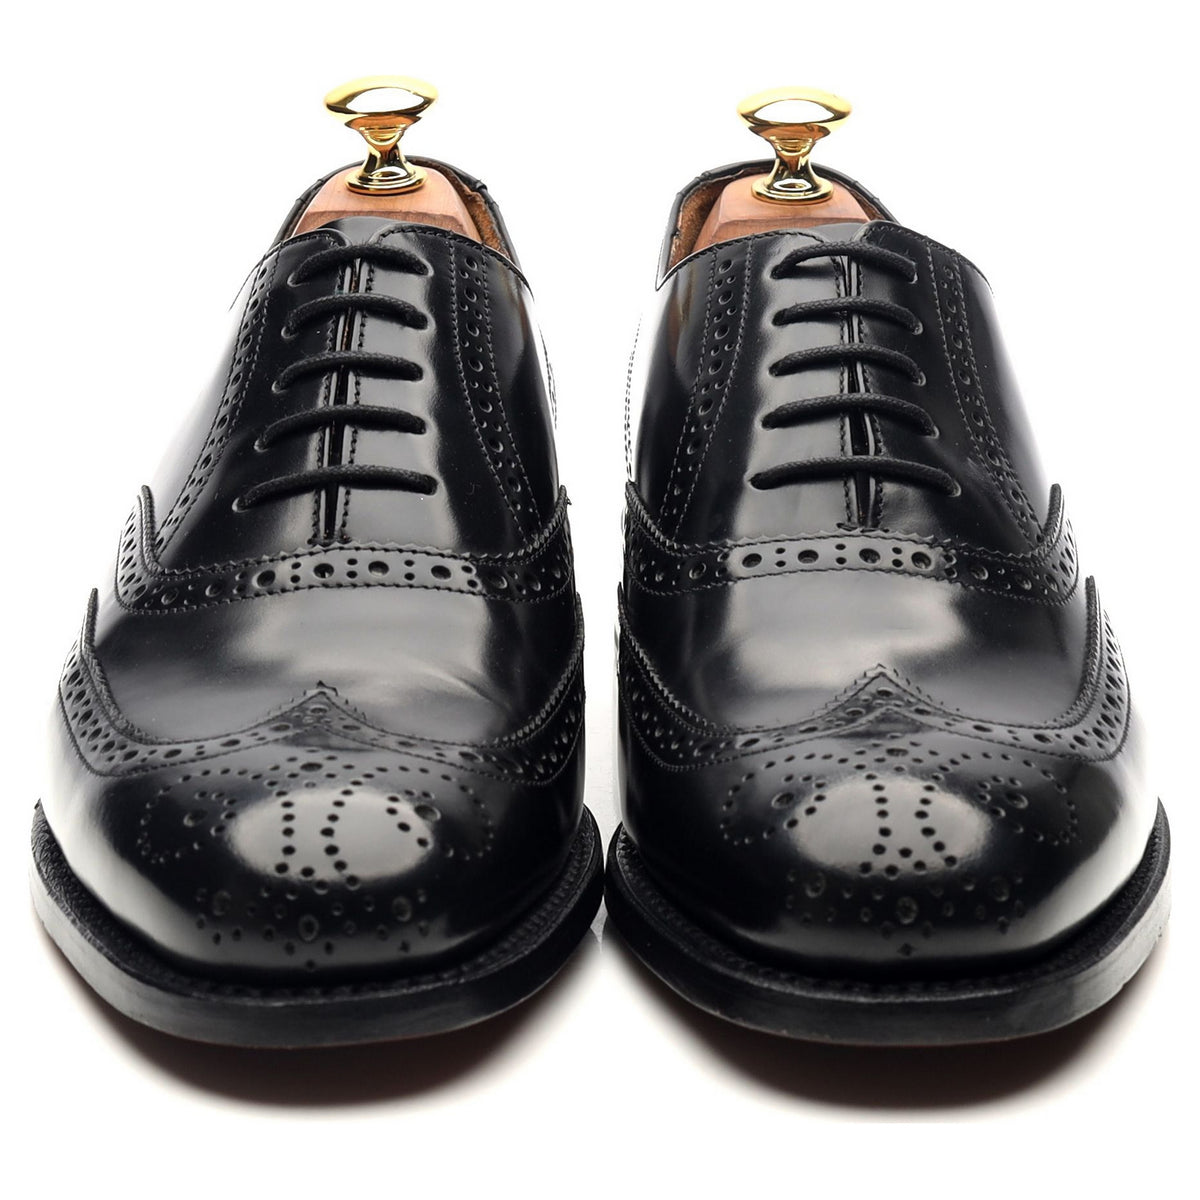 George Webb Black Leather Oxford Brogues UK 6.5 G